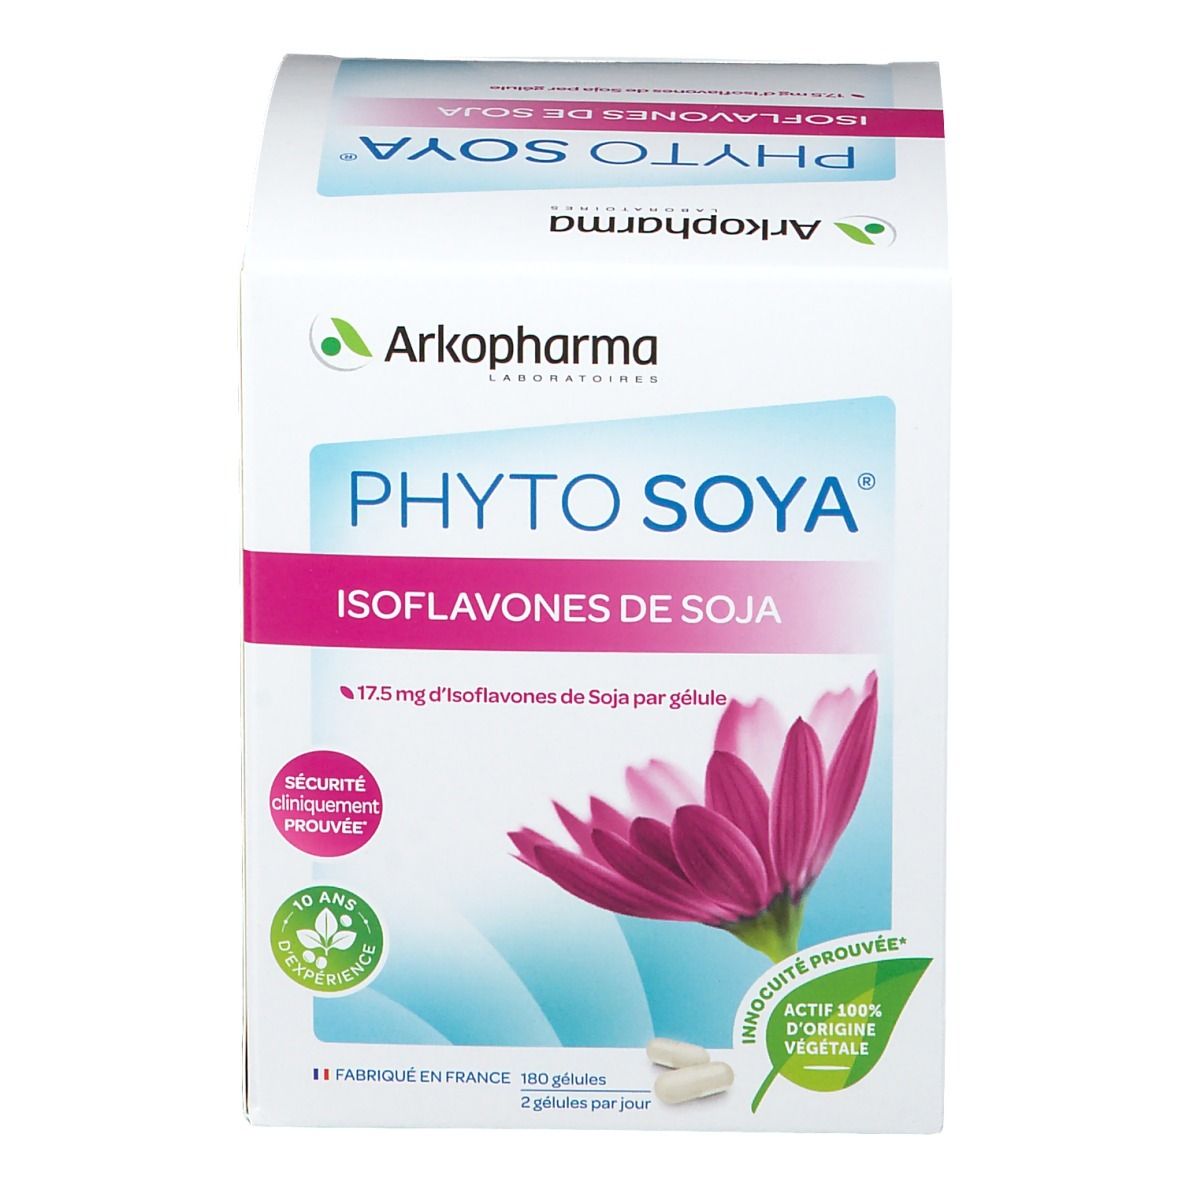 Arkopharma Phyto Soya 17,5 mg